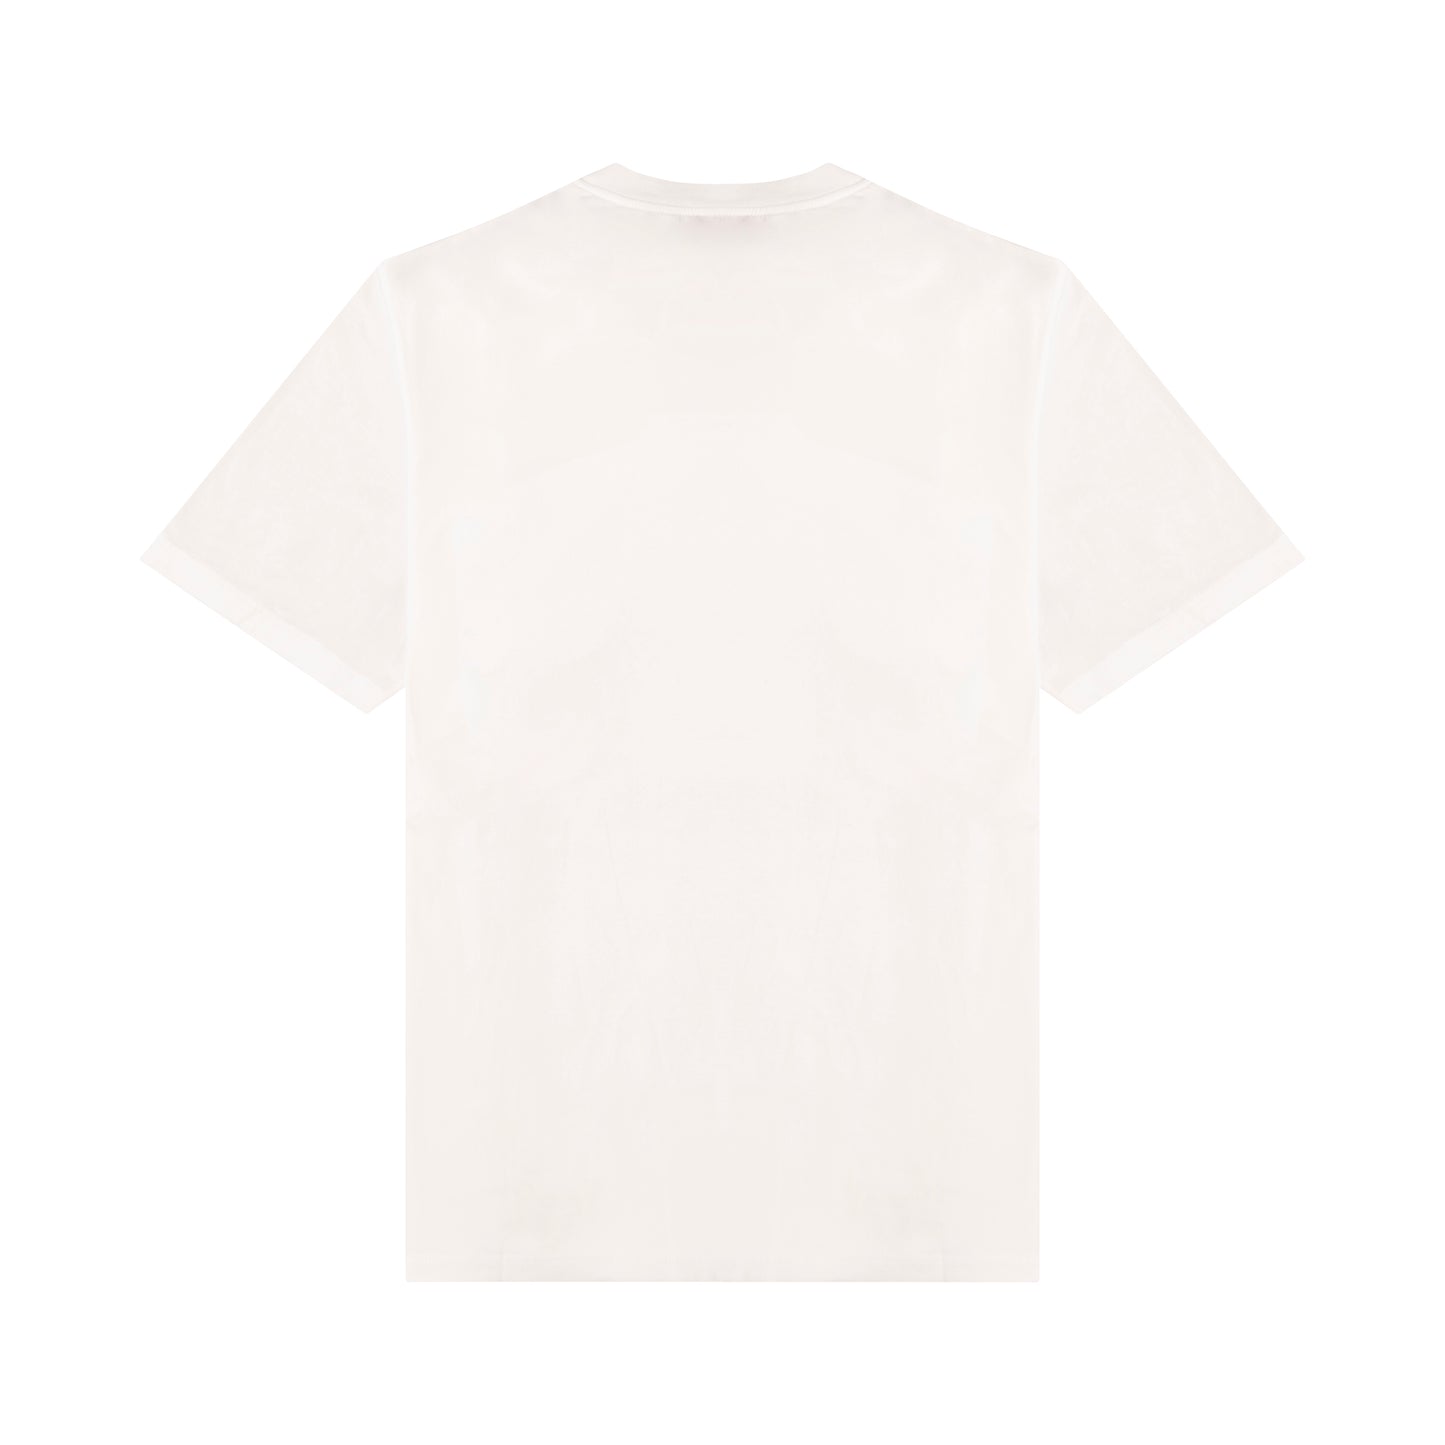 Maison Margiela Logo Print T-Shirt in White